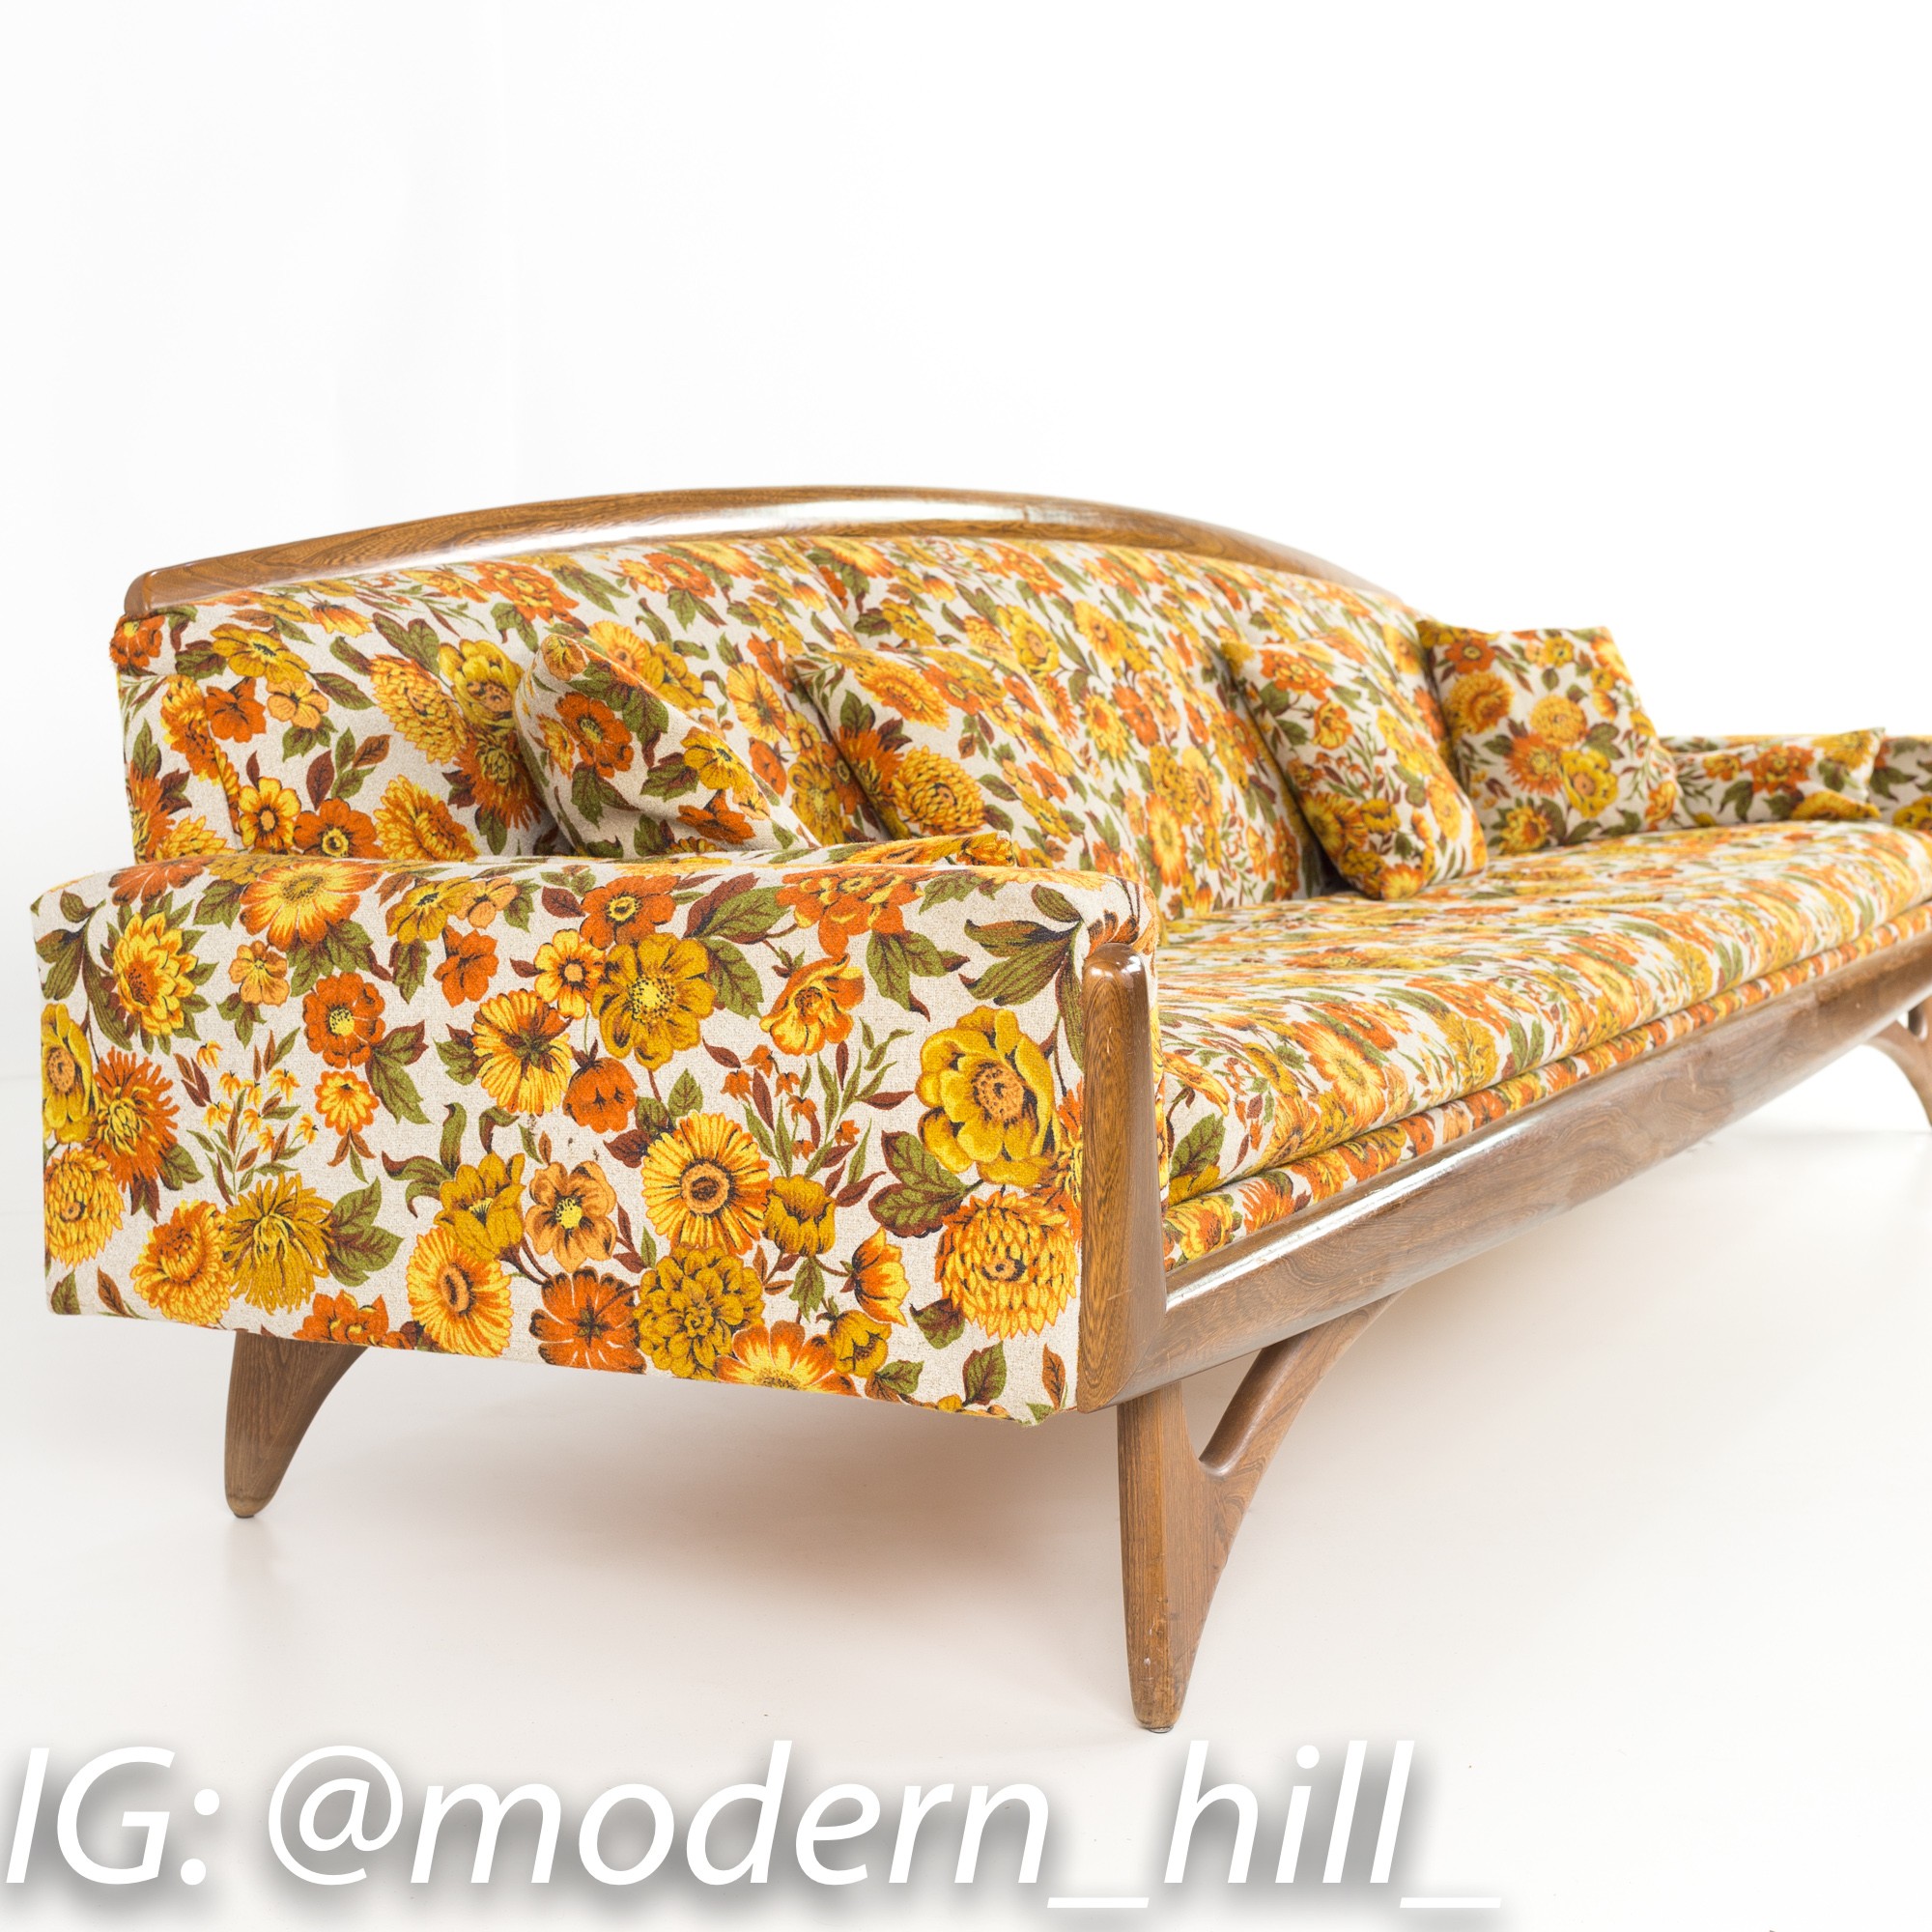 Kroehler Adrian Pearsall Style Mid Century Modern Gondola Sofa